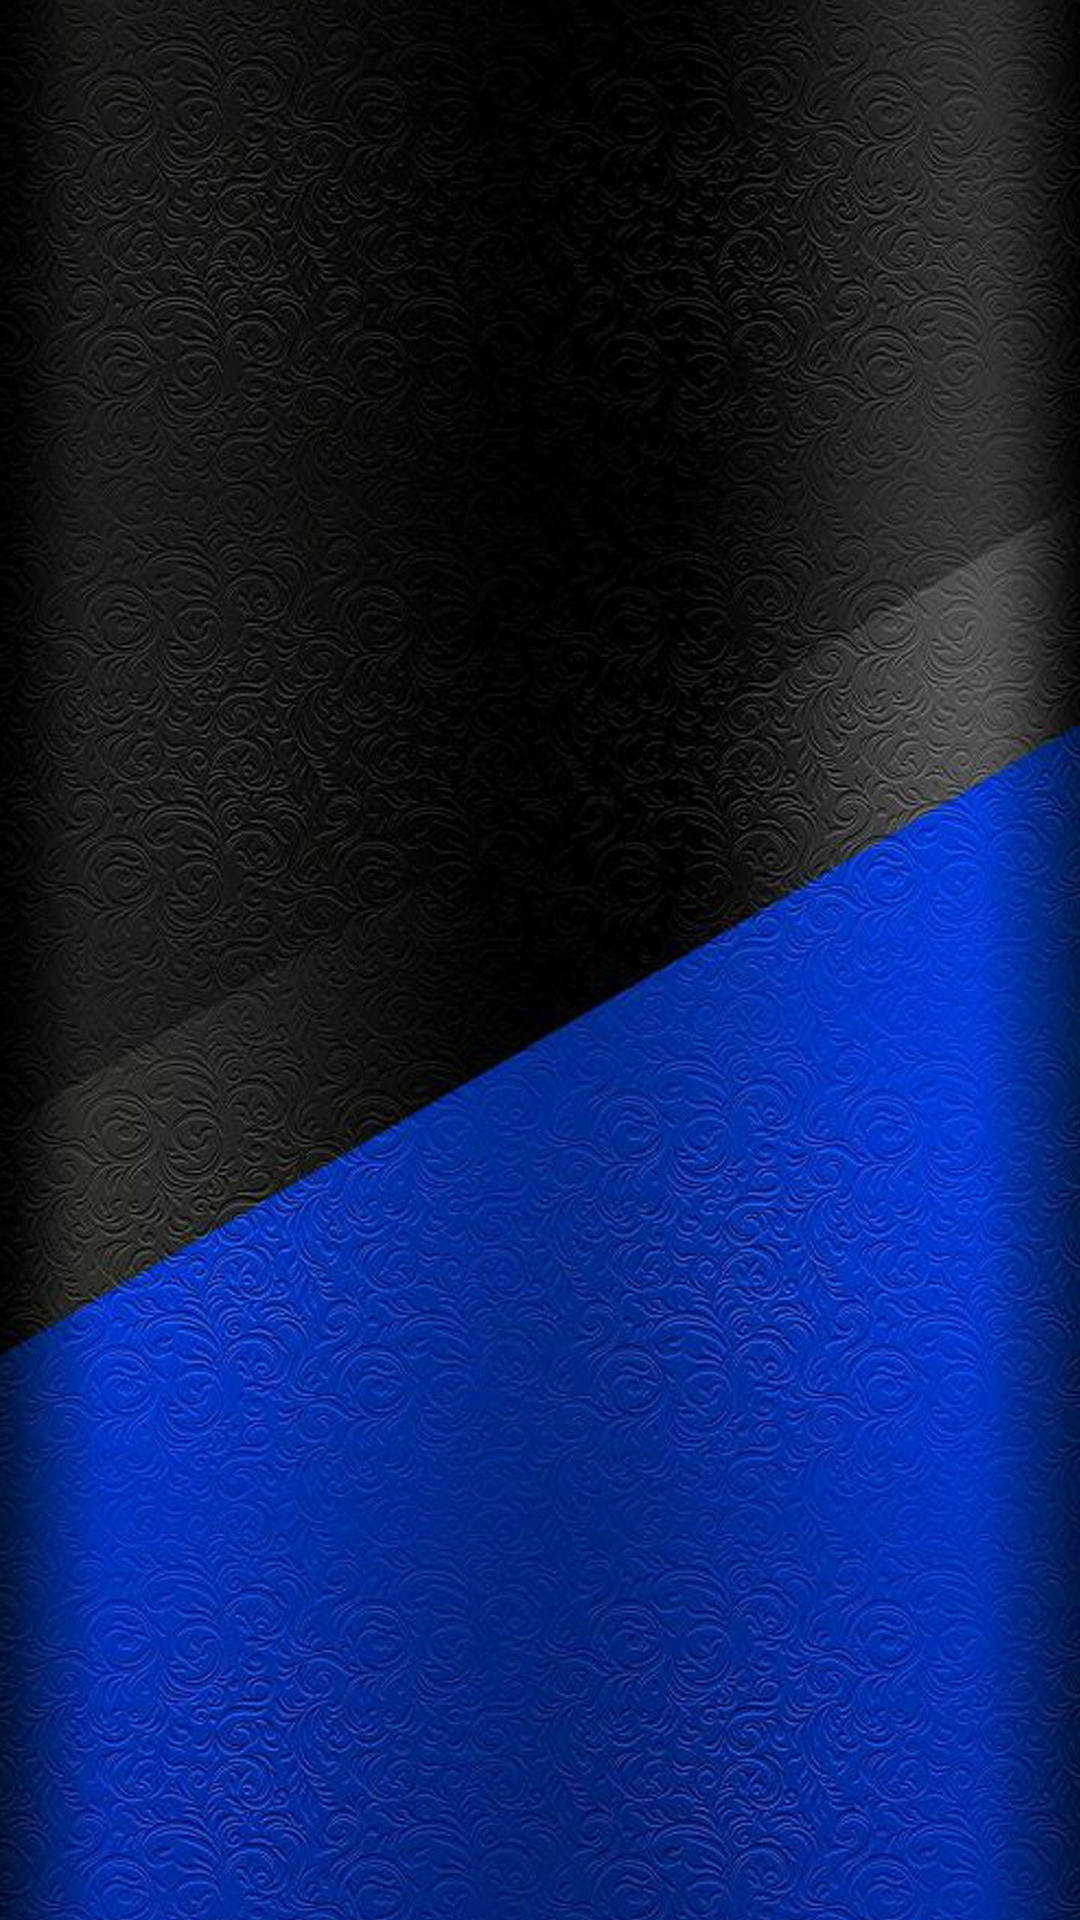 Samsung Galaxy S7 Edge Black And Blue Textured